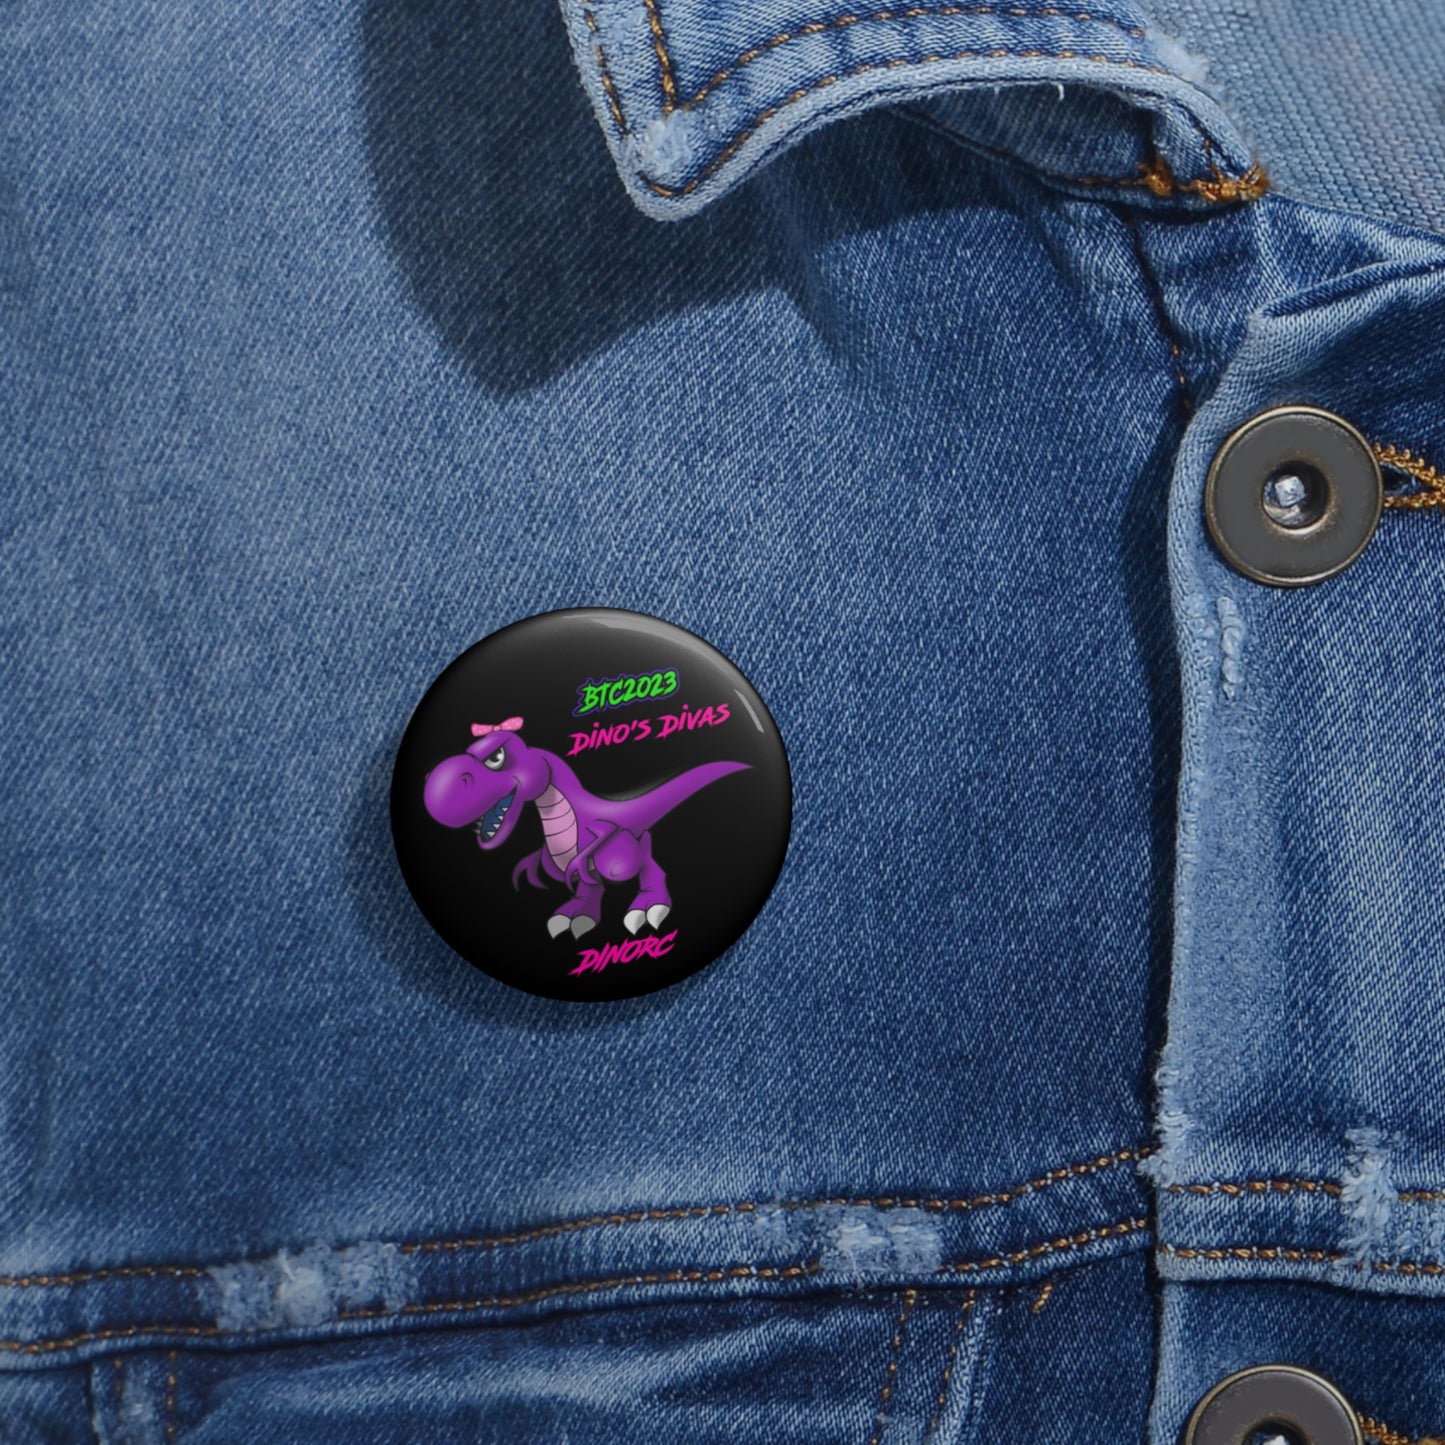 BTC DinoRC Diva Custom Pin Buttons